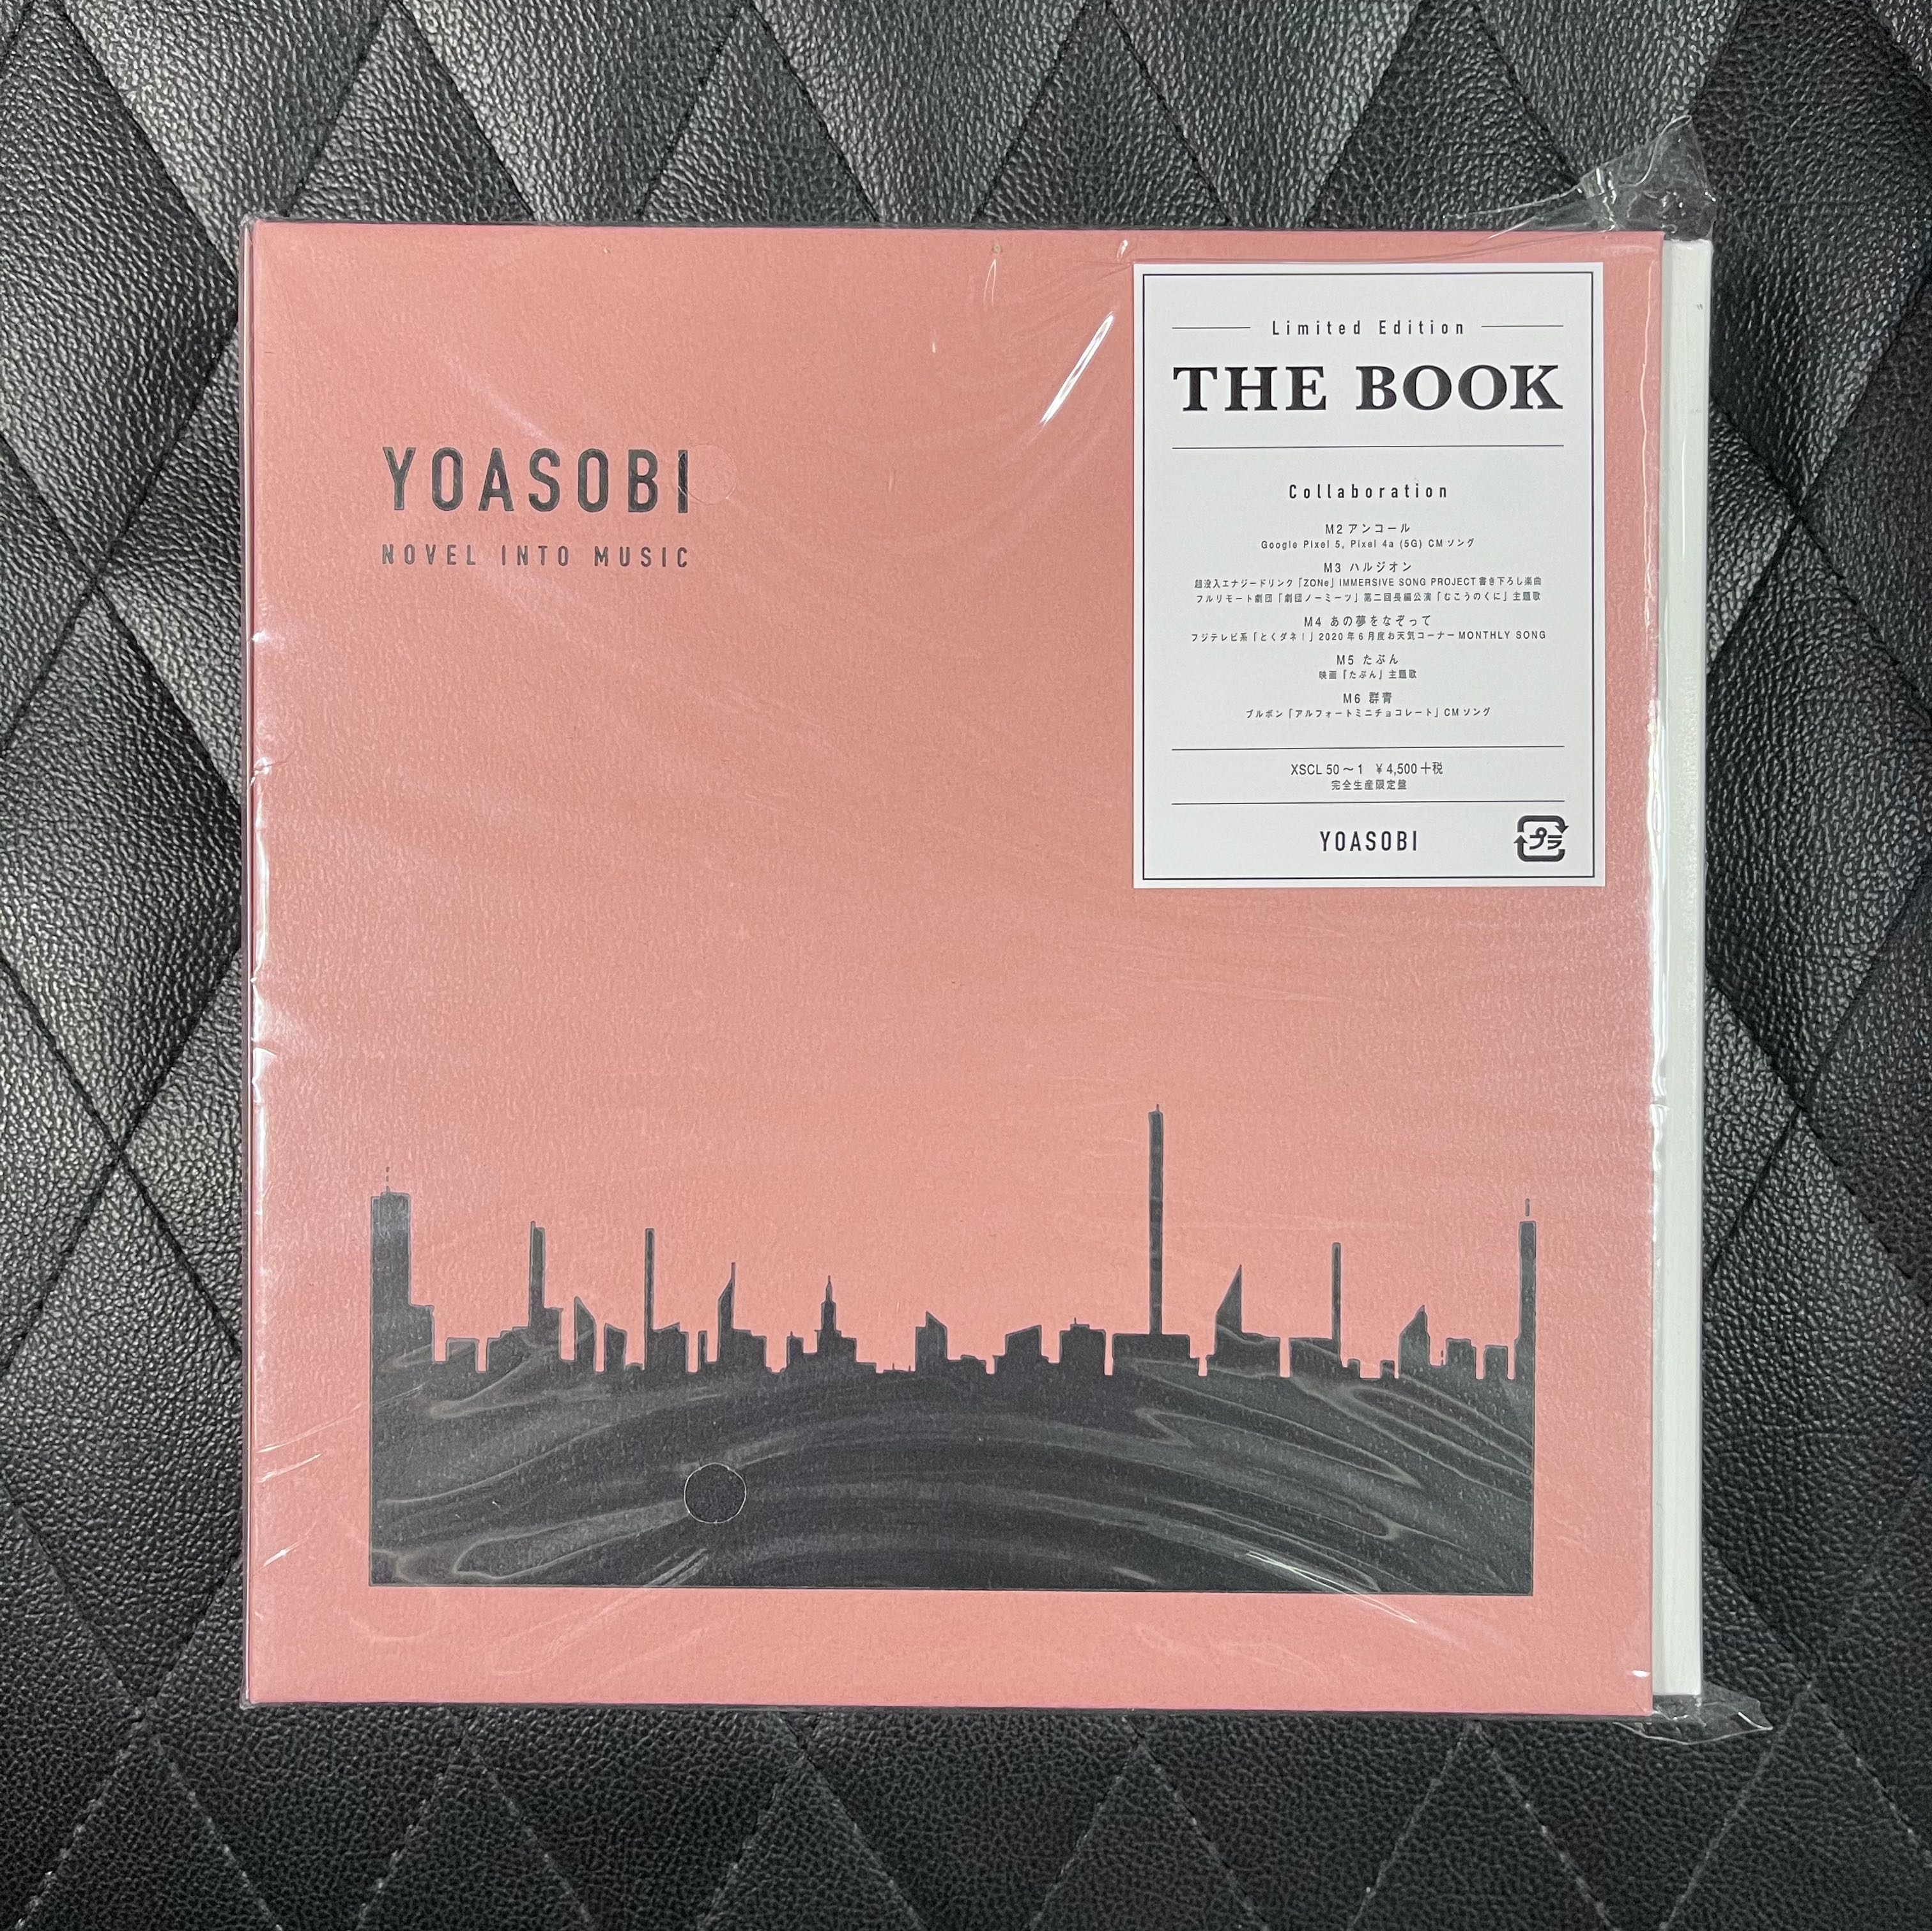 THE BOOK 完全生産限定盤CD+付属品 特典有 YOASOBI